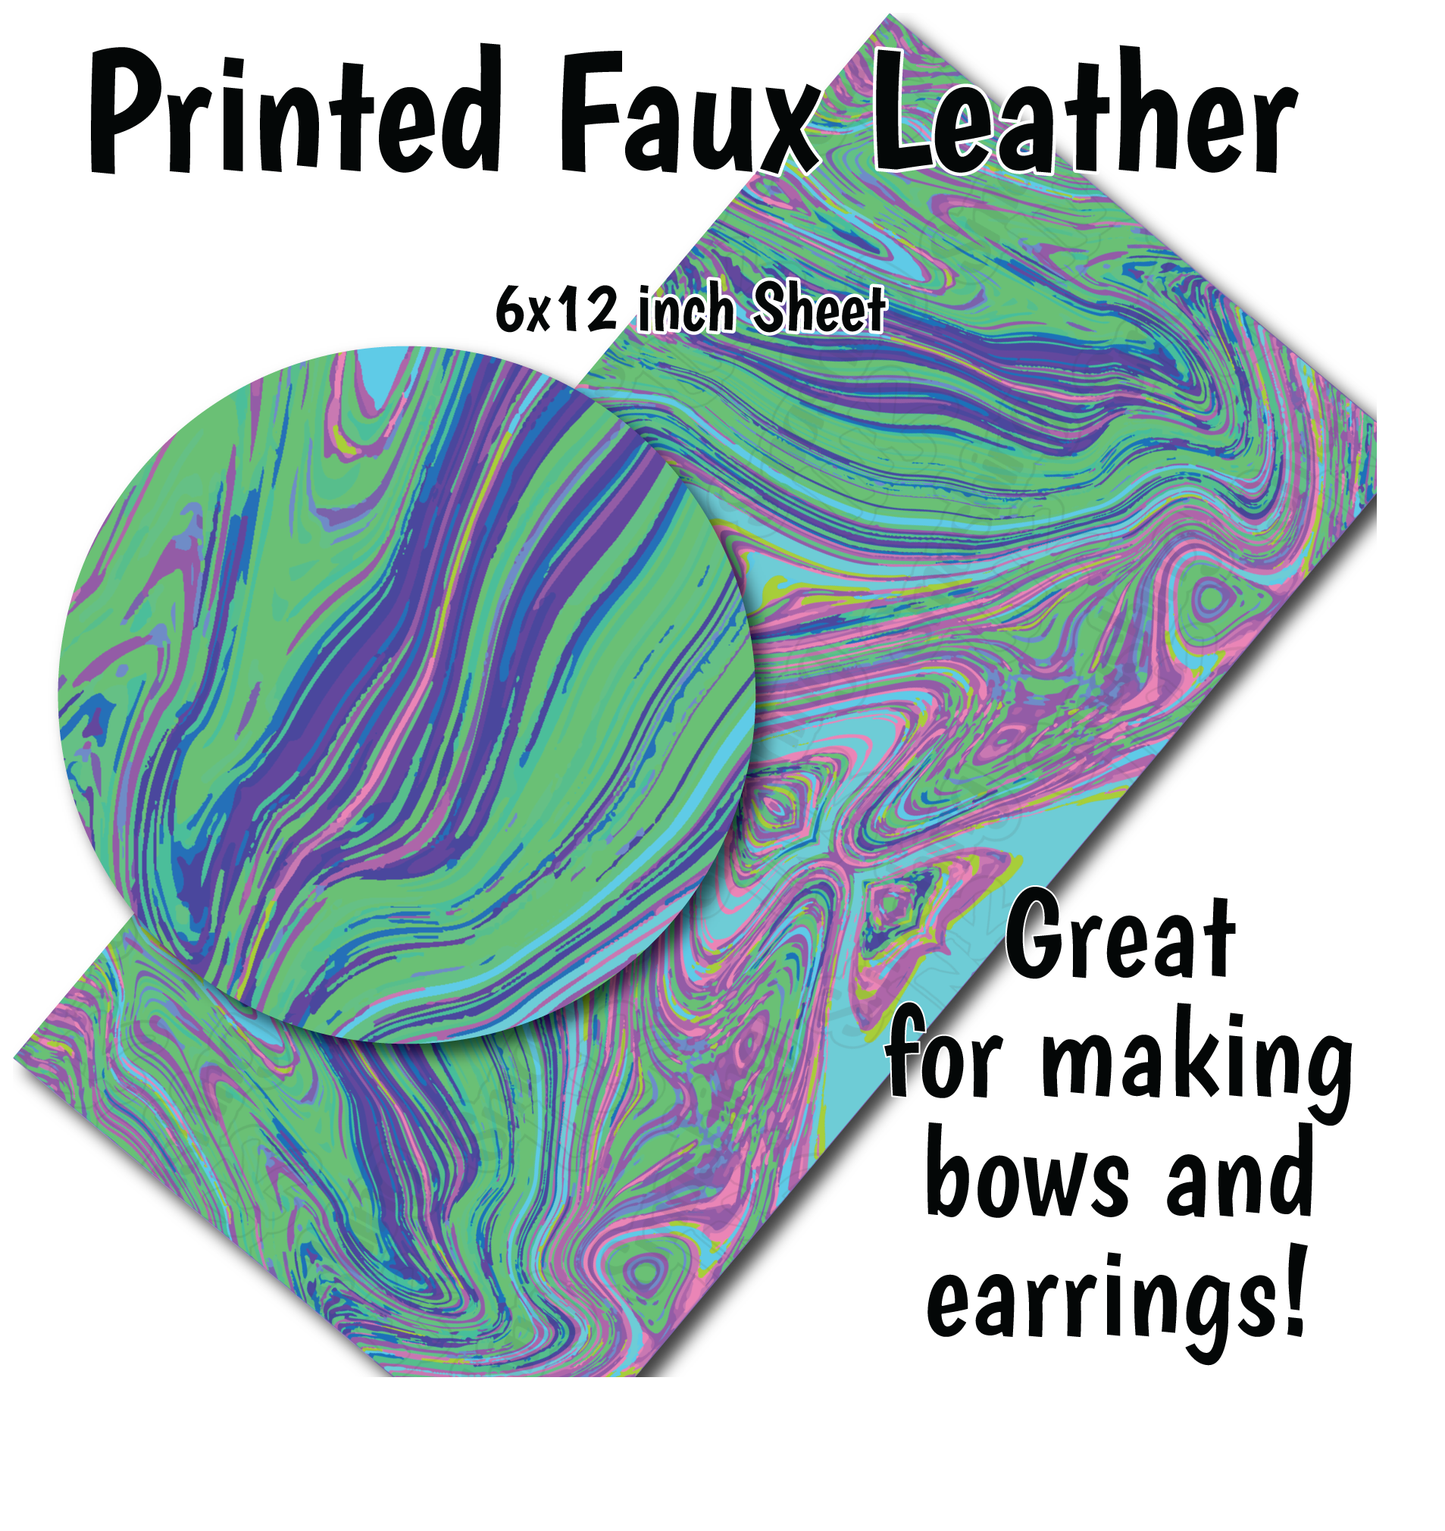 Swirls - Faux Leather Sheet (SHIPS IN 3 BUS DAYS)